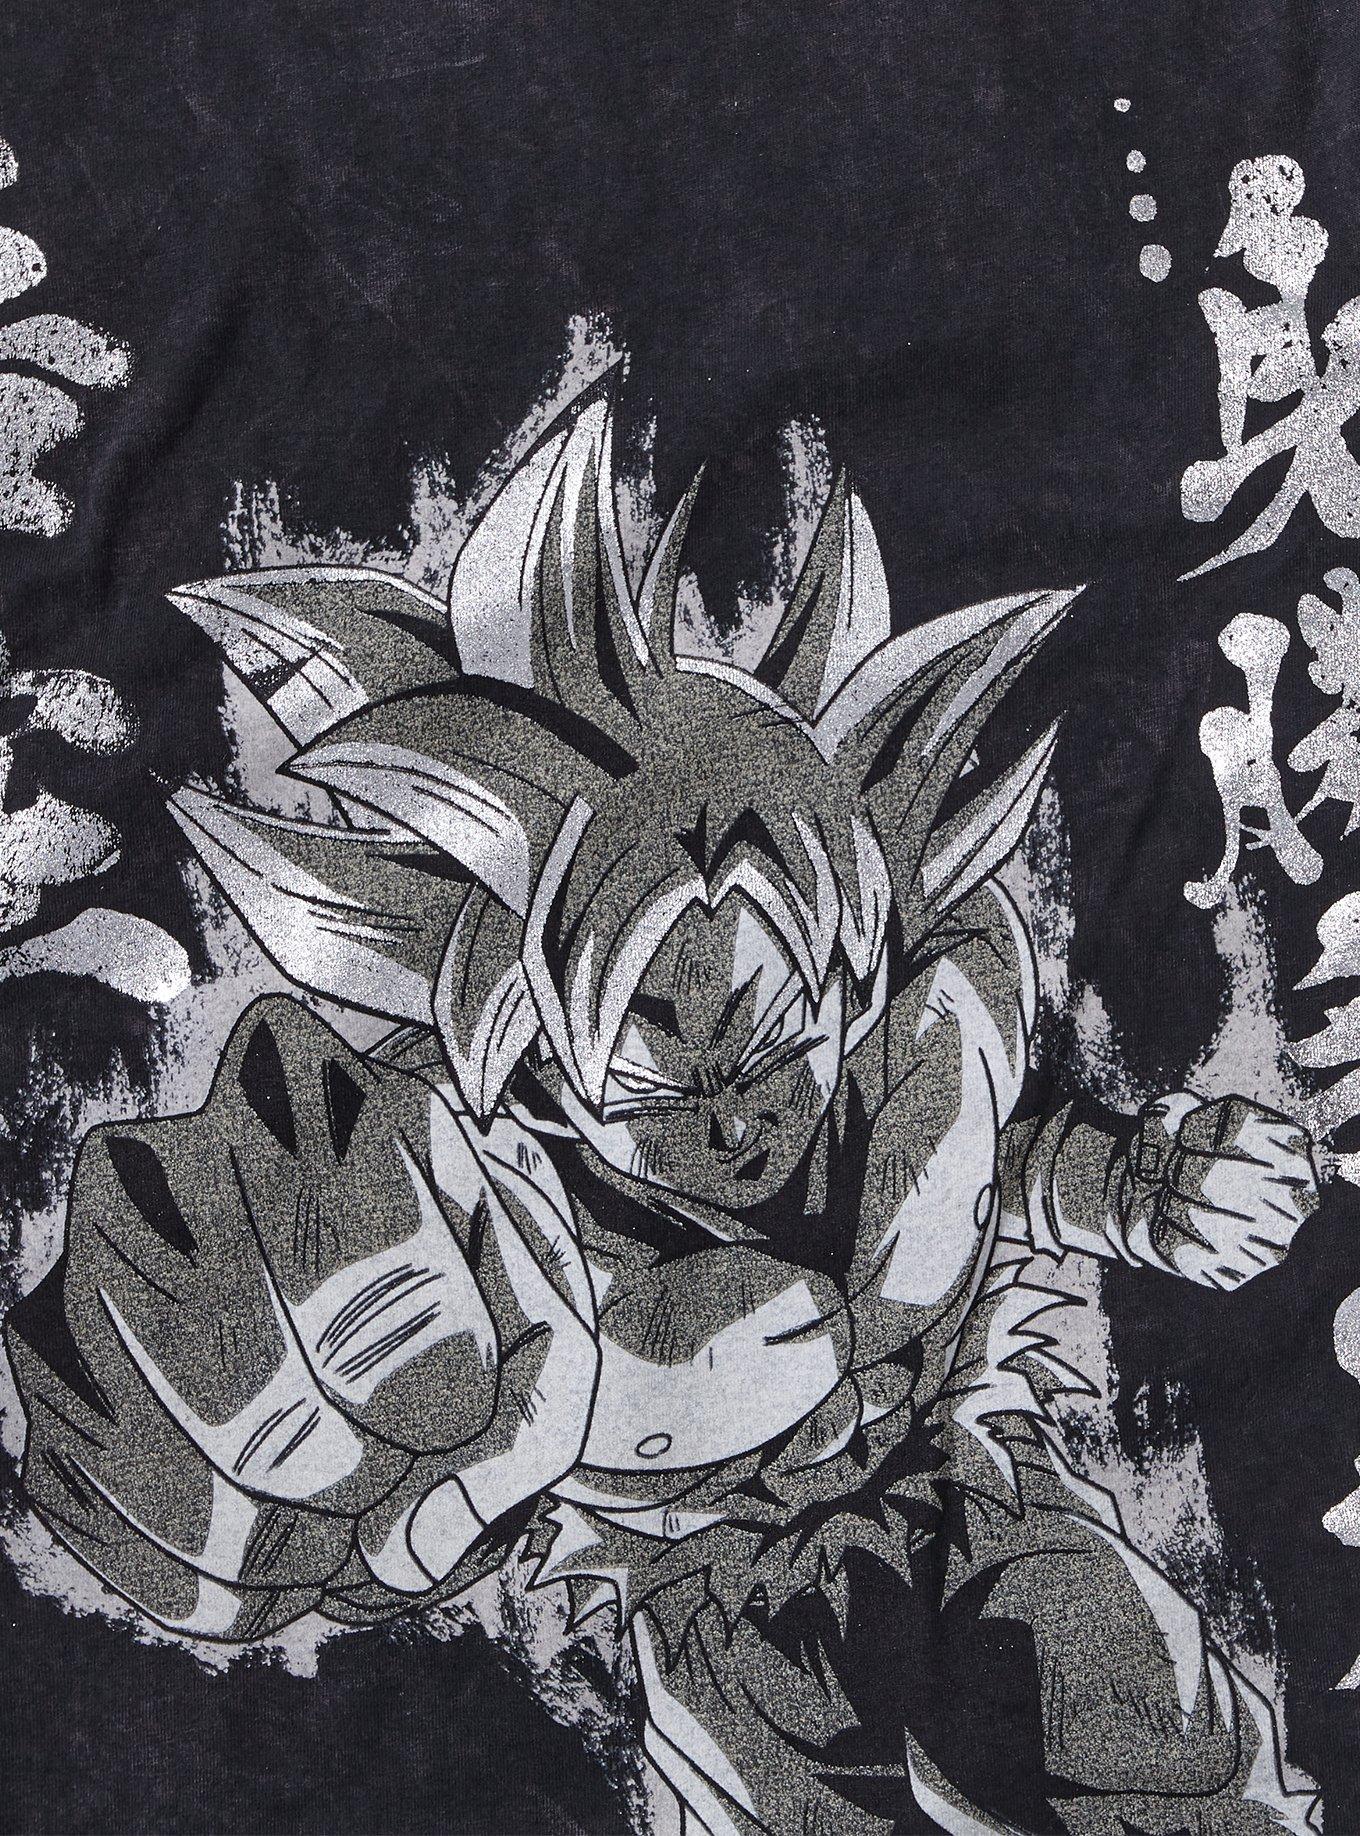 Dragon Ball Super Goku Foil Mineral Wash T-Shirt